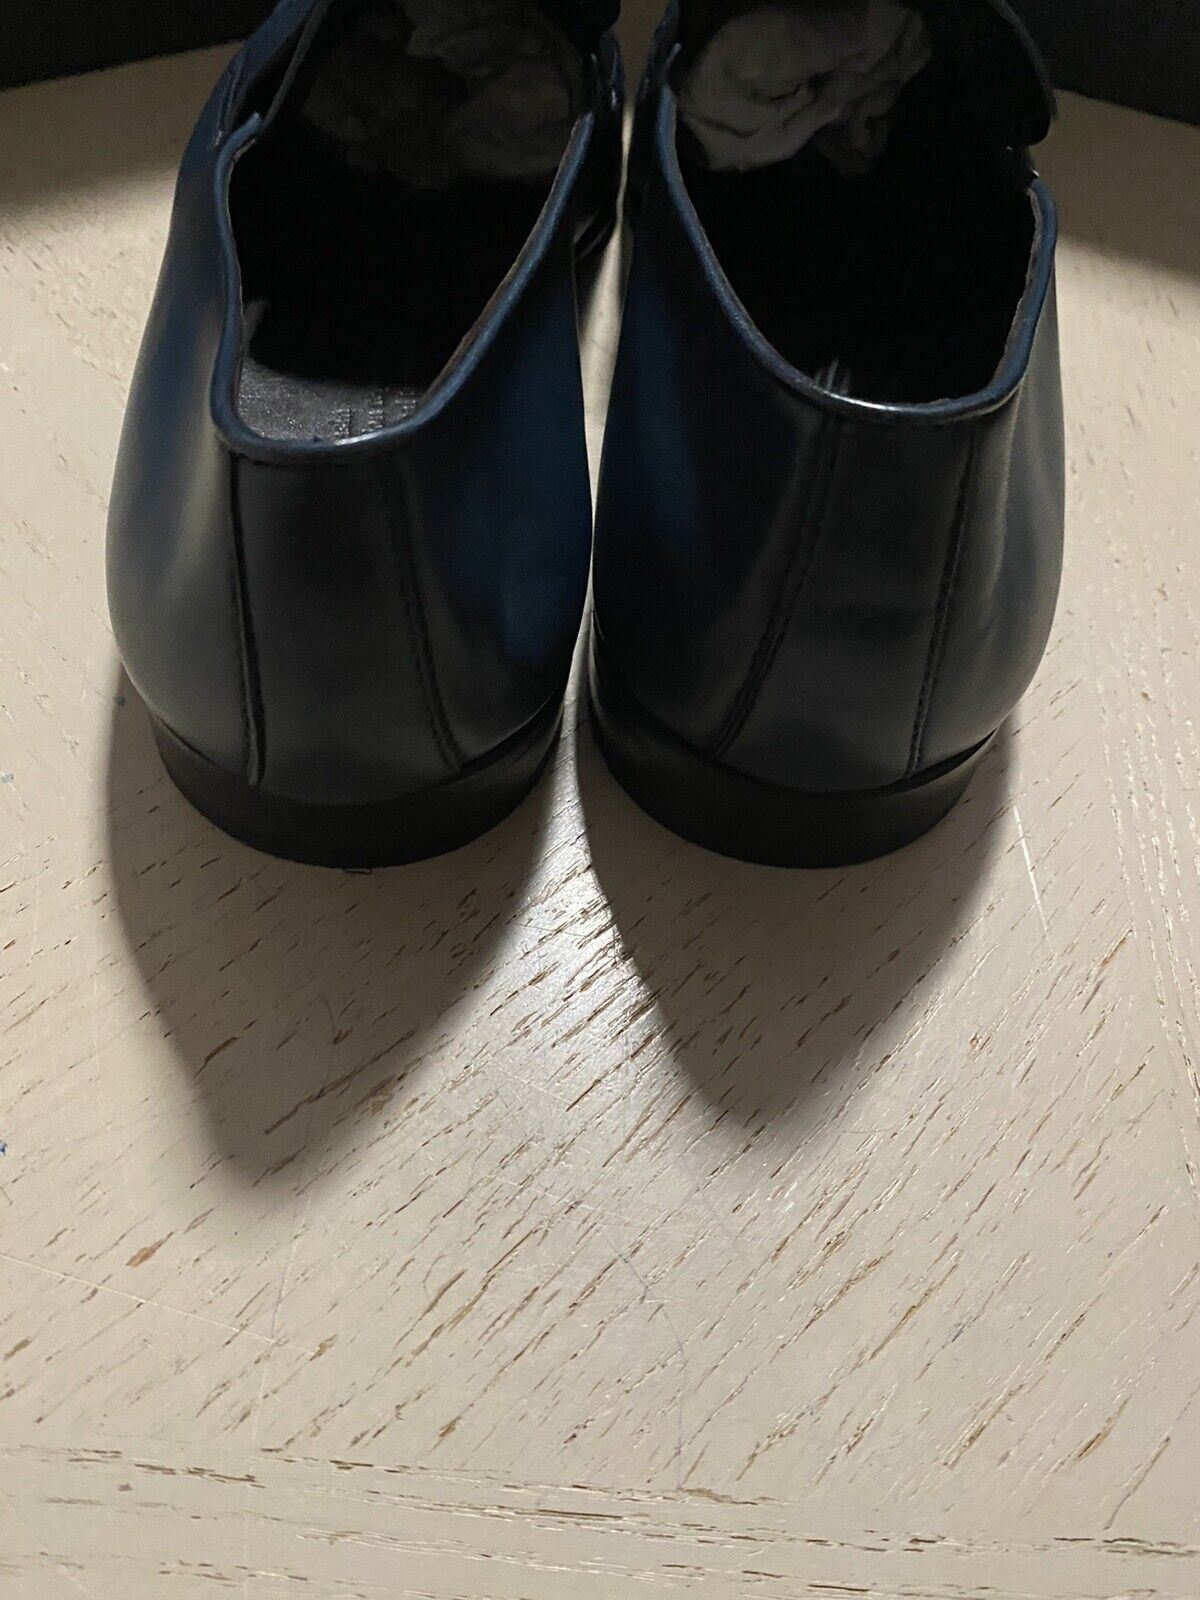 New $775 Ermenegildo Zegna Iconic Moccasin Leather Loafers Shoes MD Blue 11 US